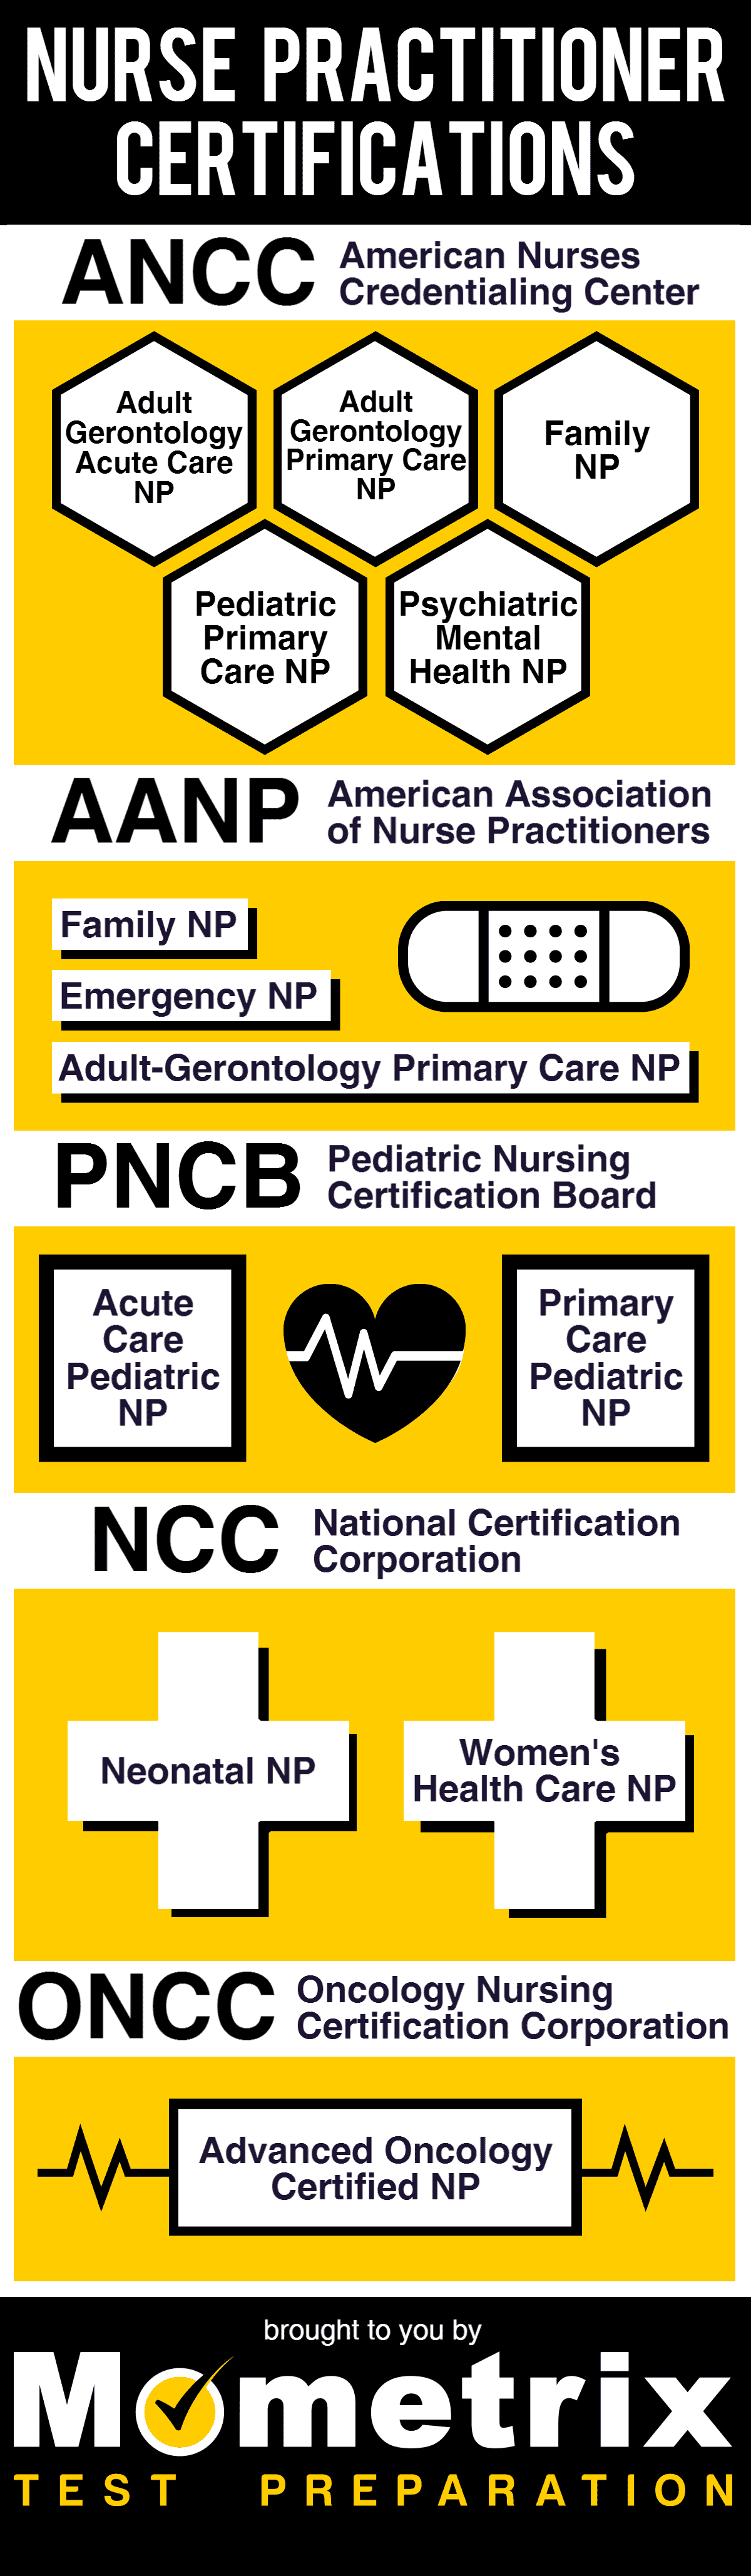 Nurse Practitioner Certification Review